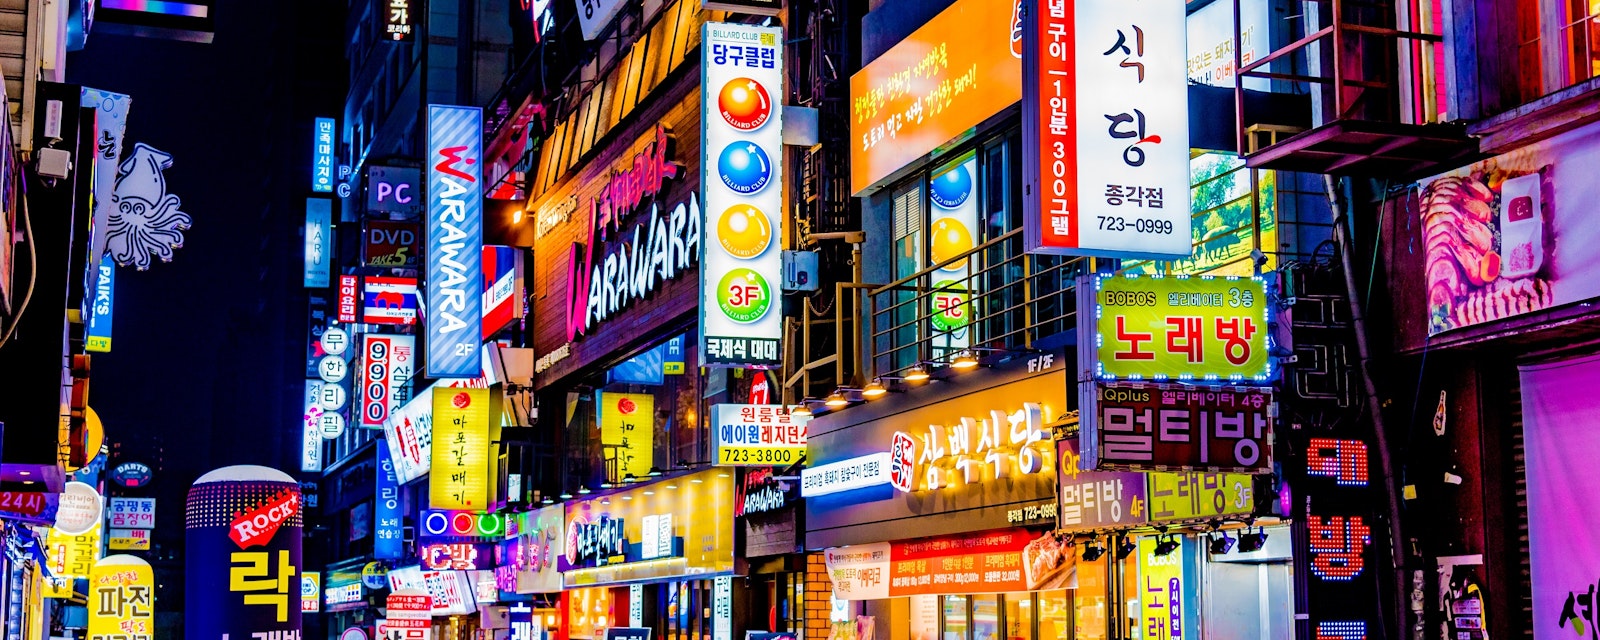 Seoul,,Korea,-,December,31,,2016,-,Colorful,Billboards,On